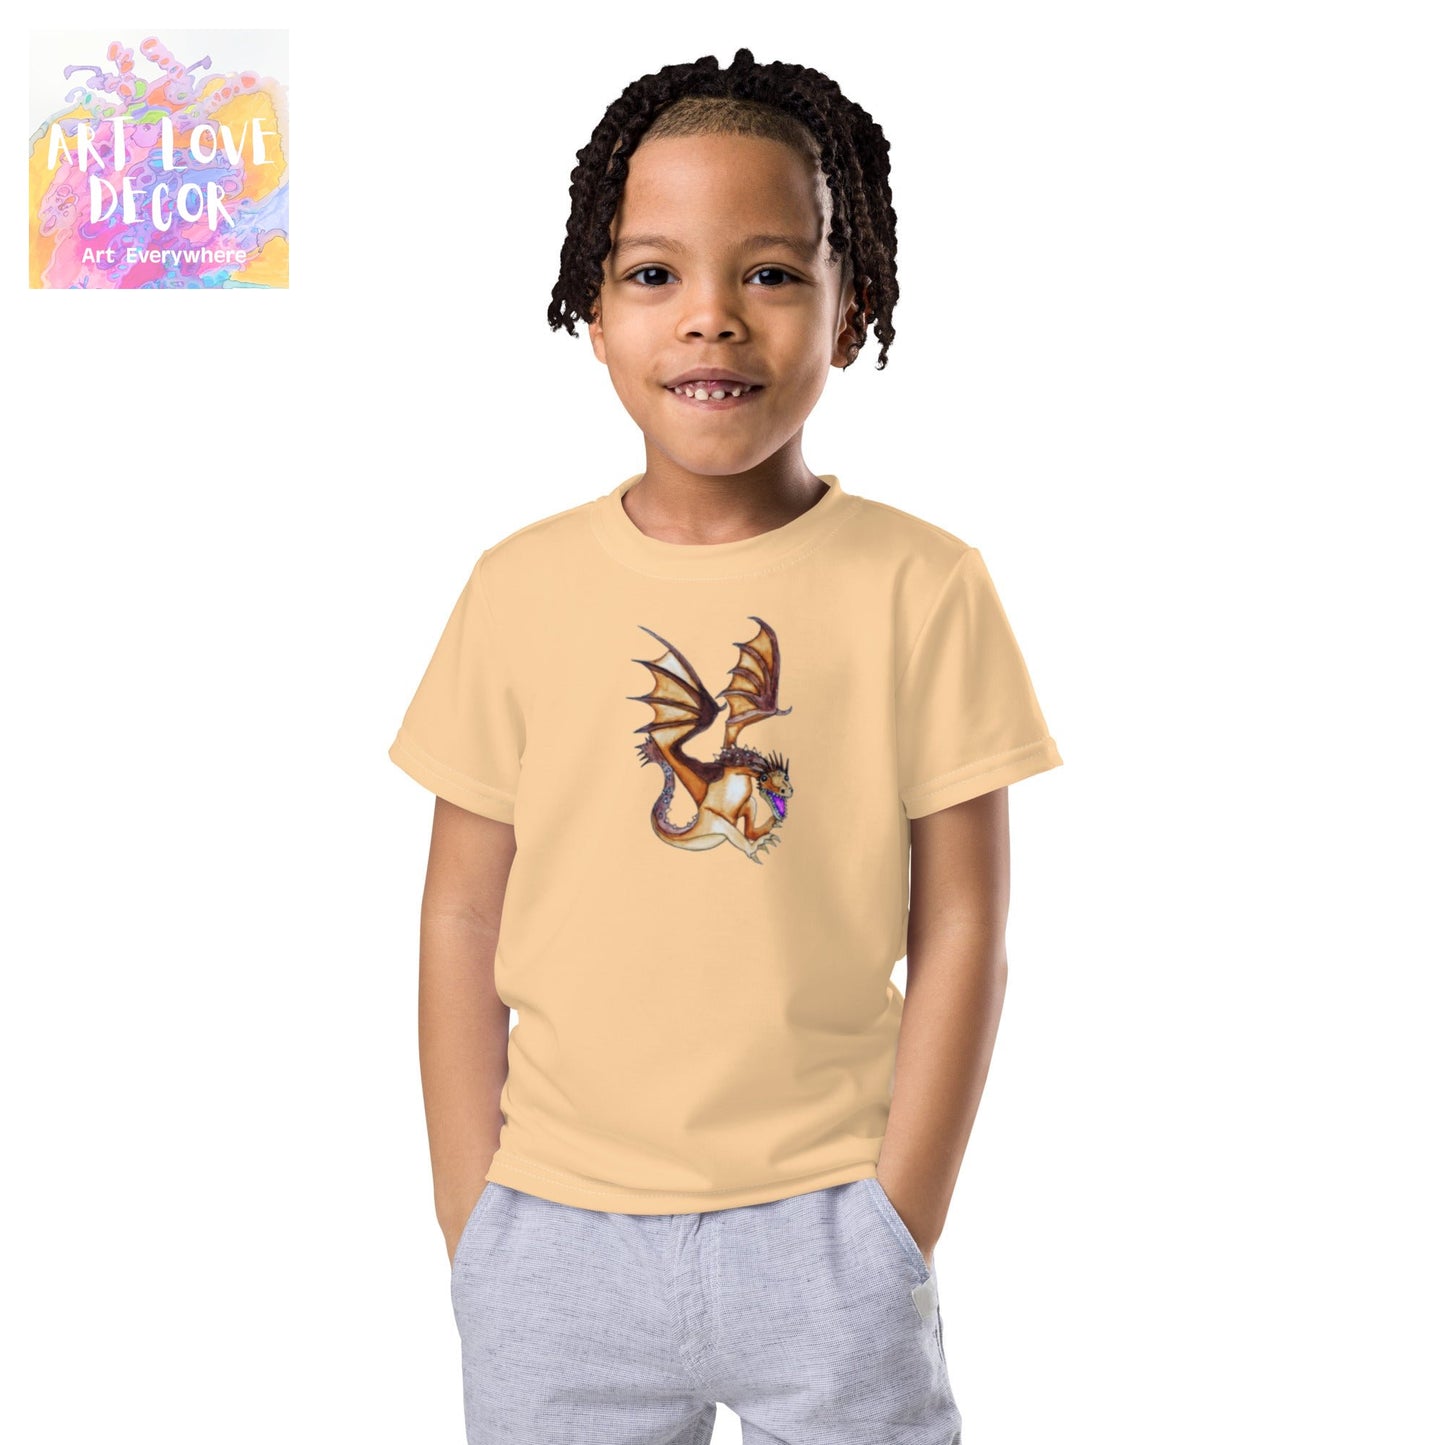 Dragon Kids crew neck t-shirt - Art Love Decor